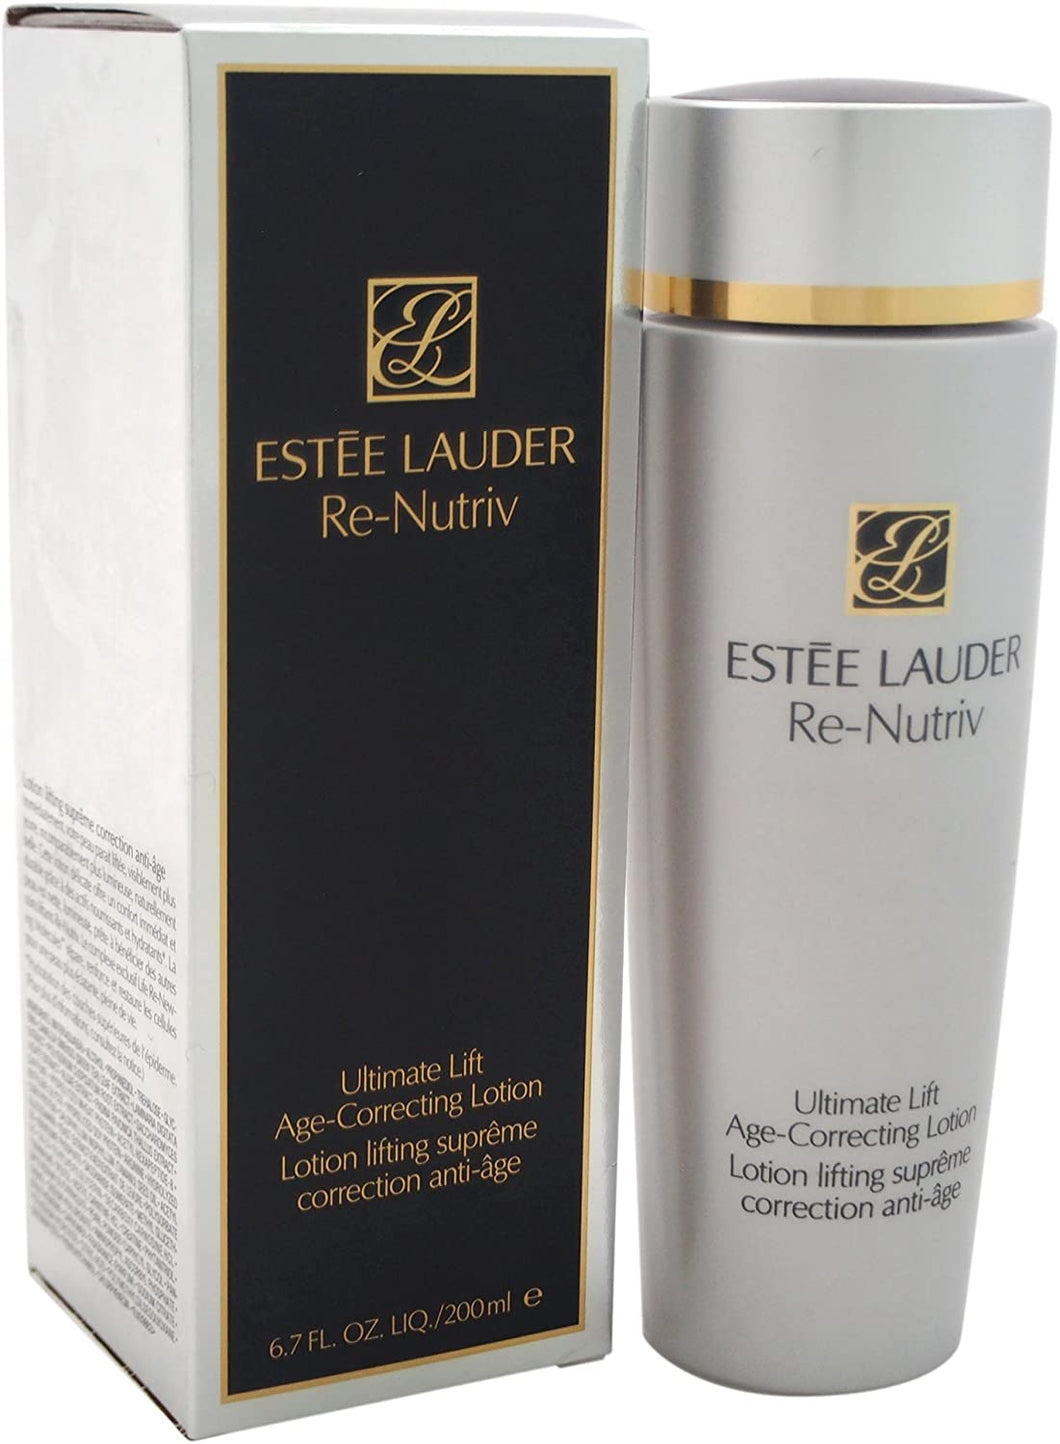 Estee Lauder Re-Nutriv Ultimate Lift Age-Correcting Lotion, 6.7 oz